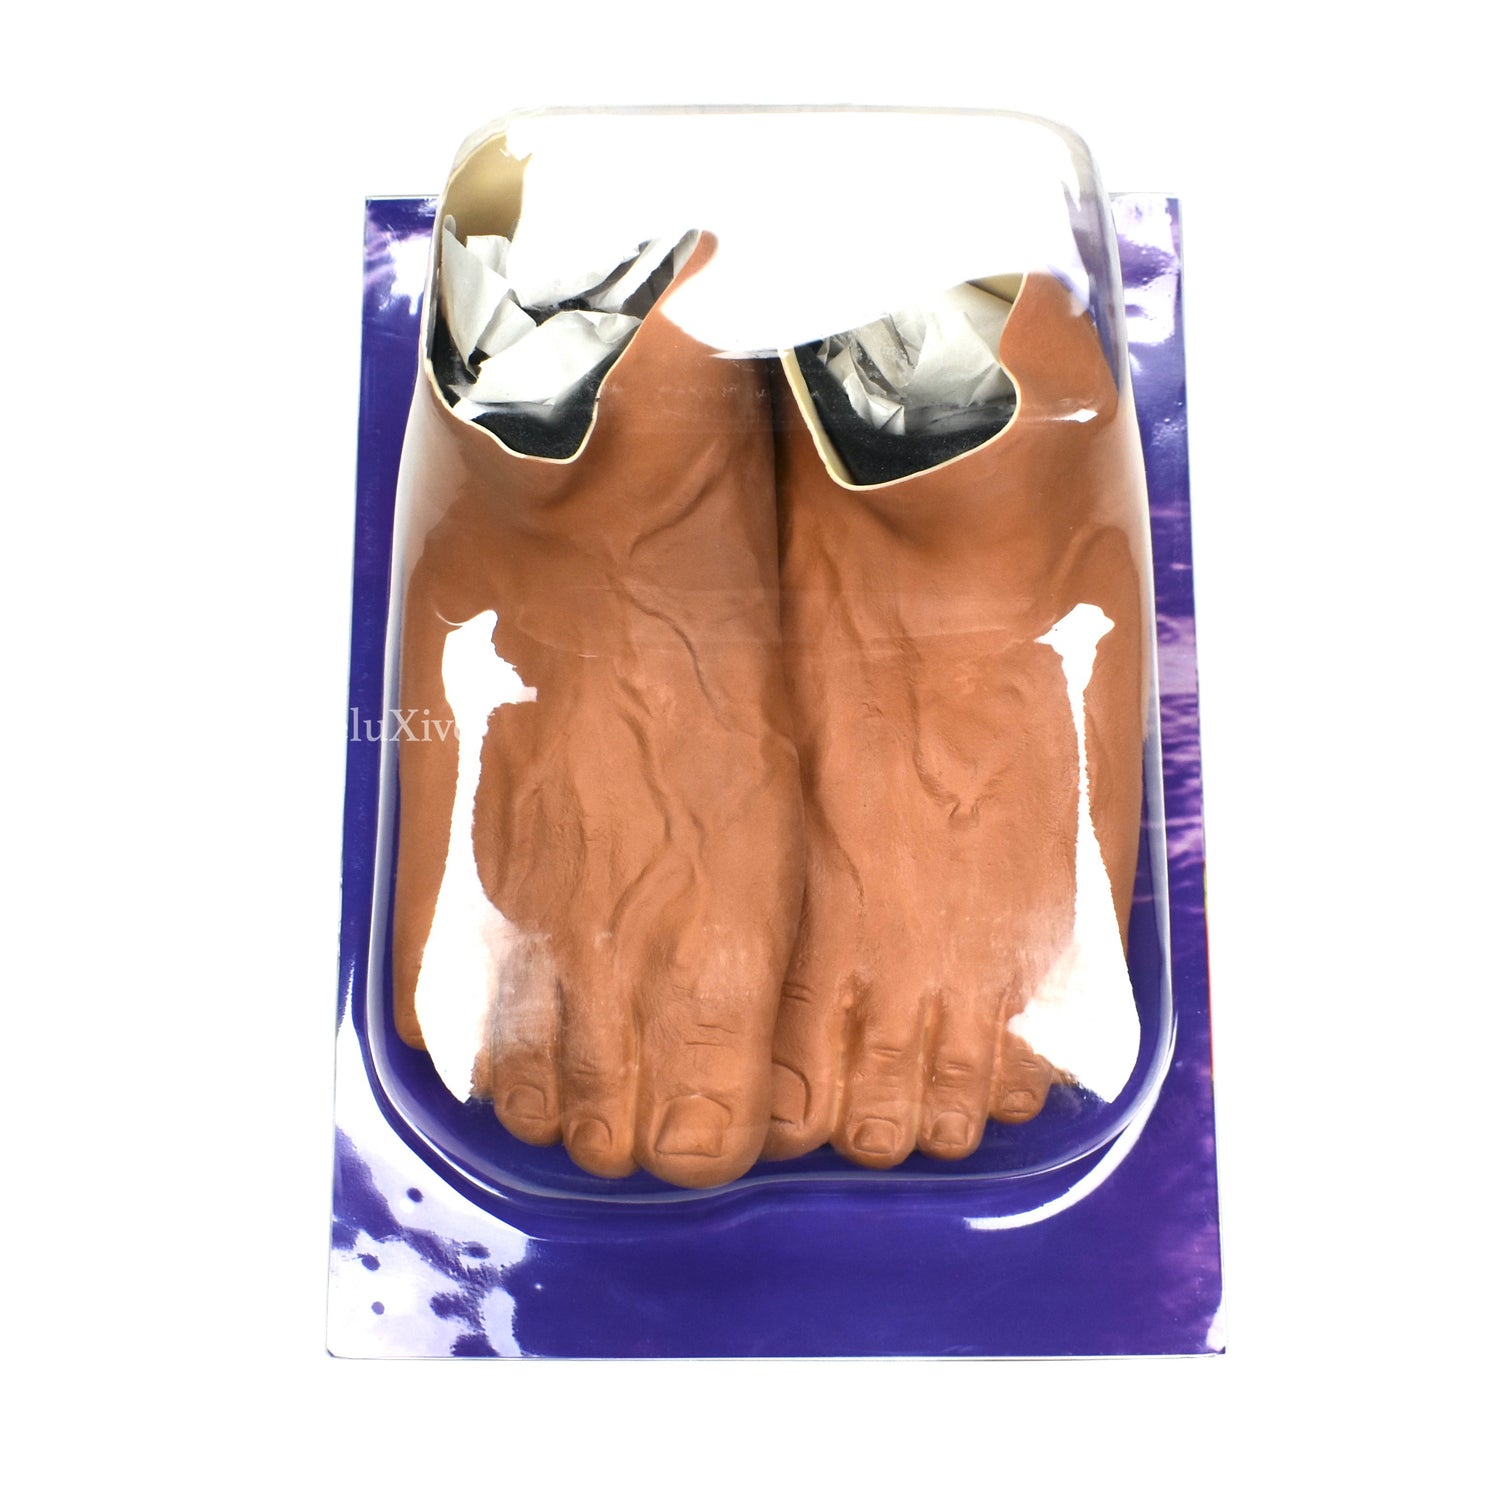 Imran potato caveman slippers - One Size